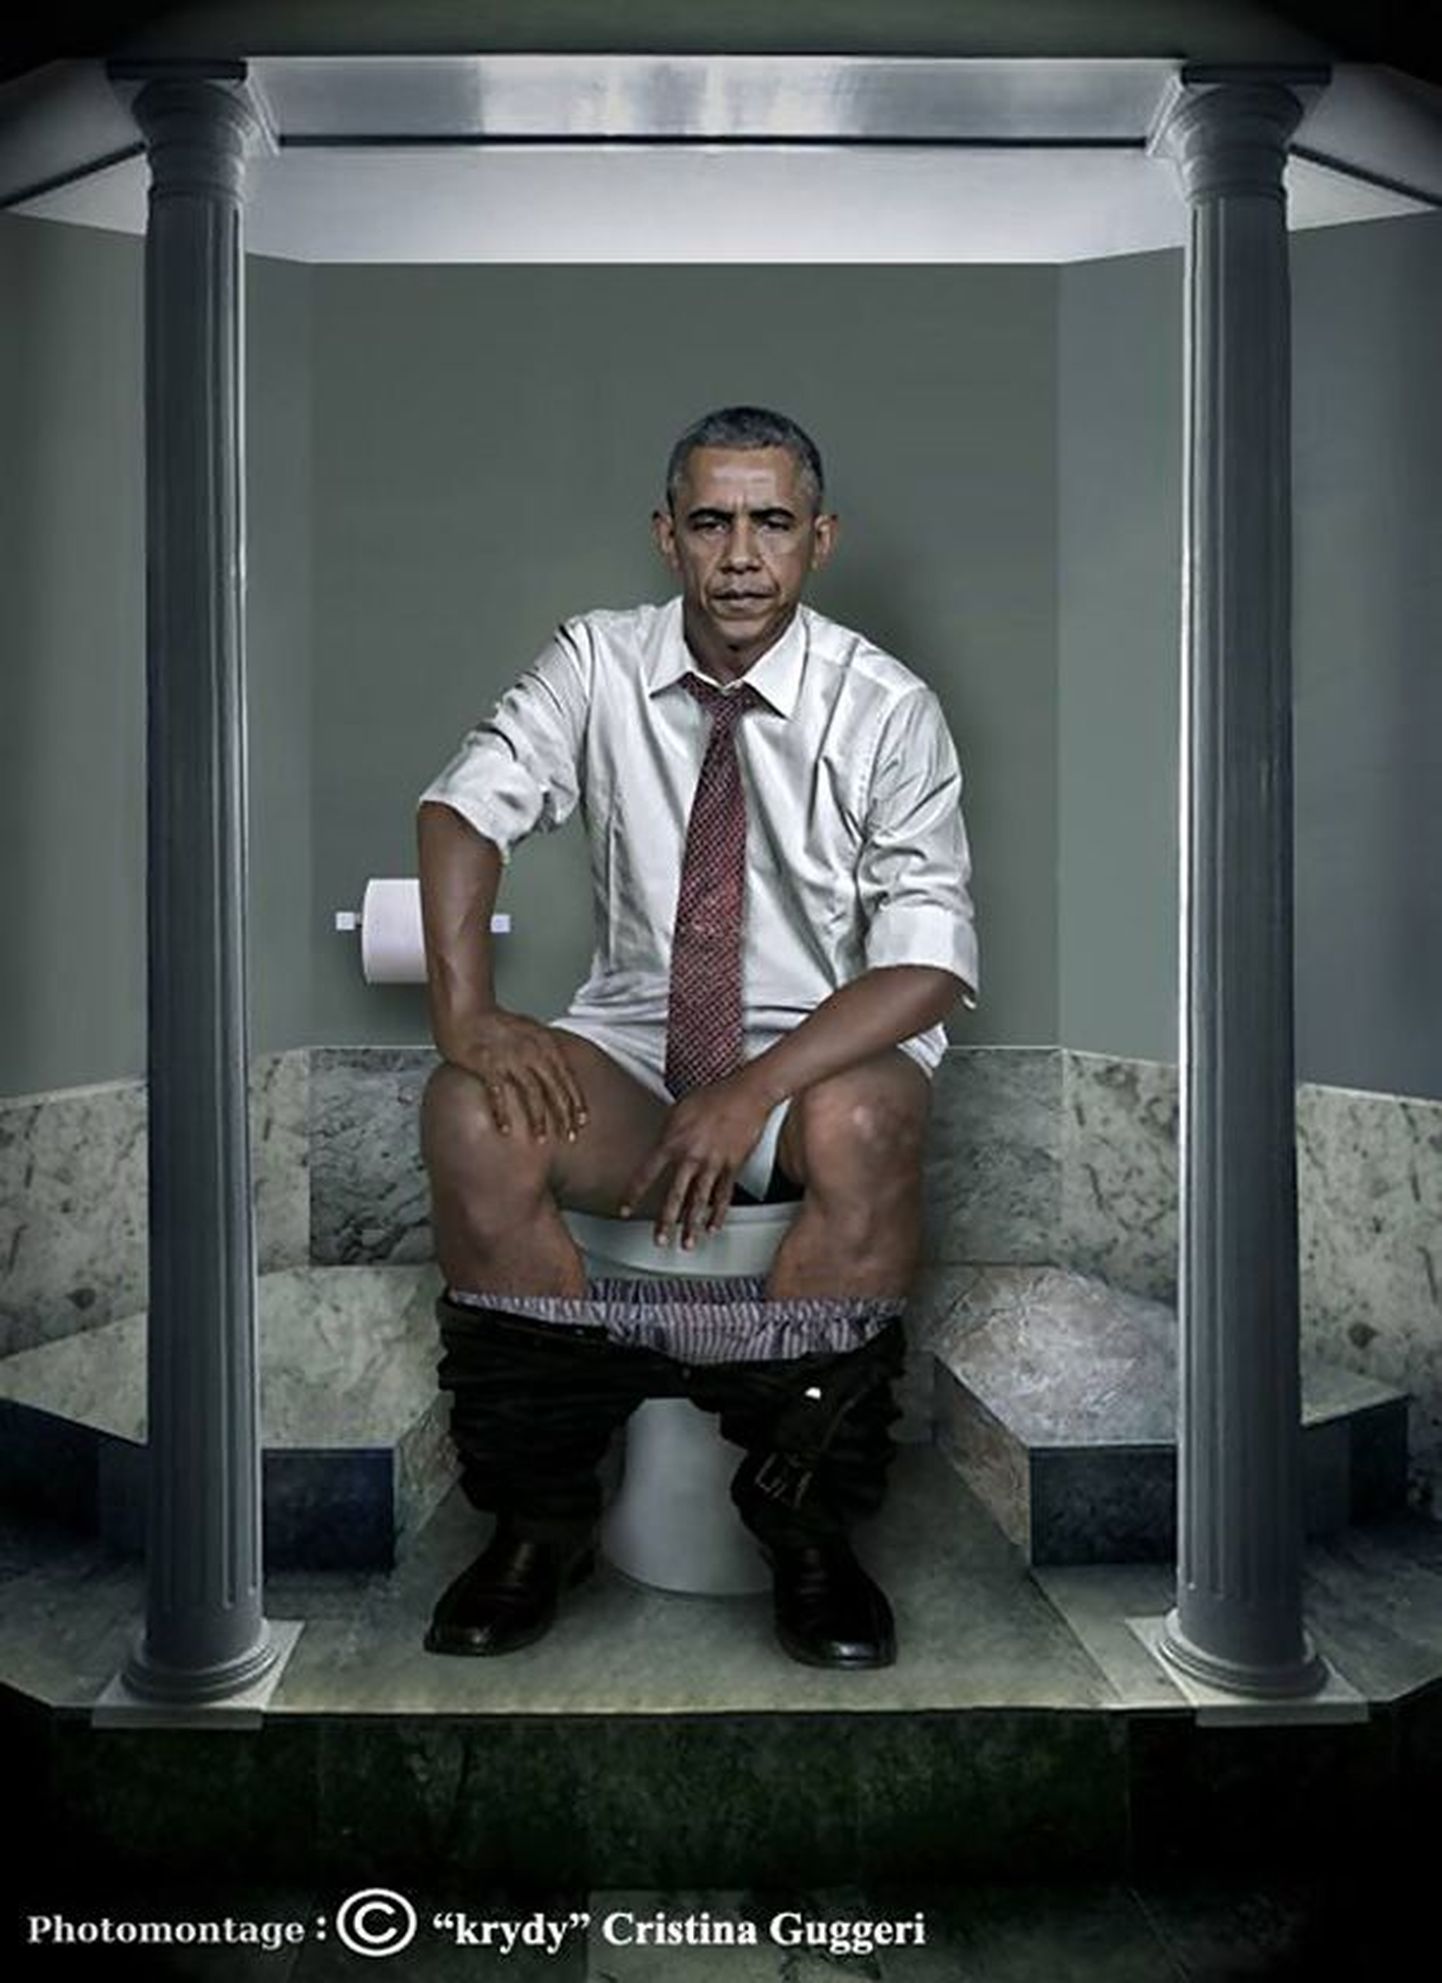 Pildiseeria «The daily duty» kunstnikult Cristina Guggeri
Barack Obama potil